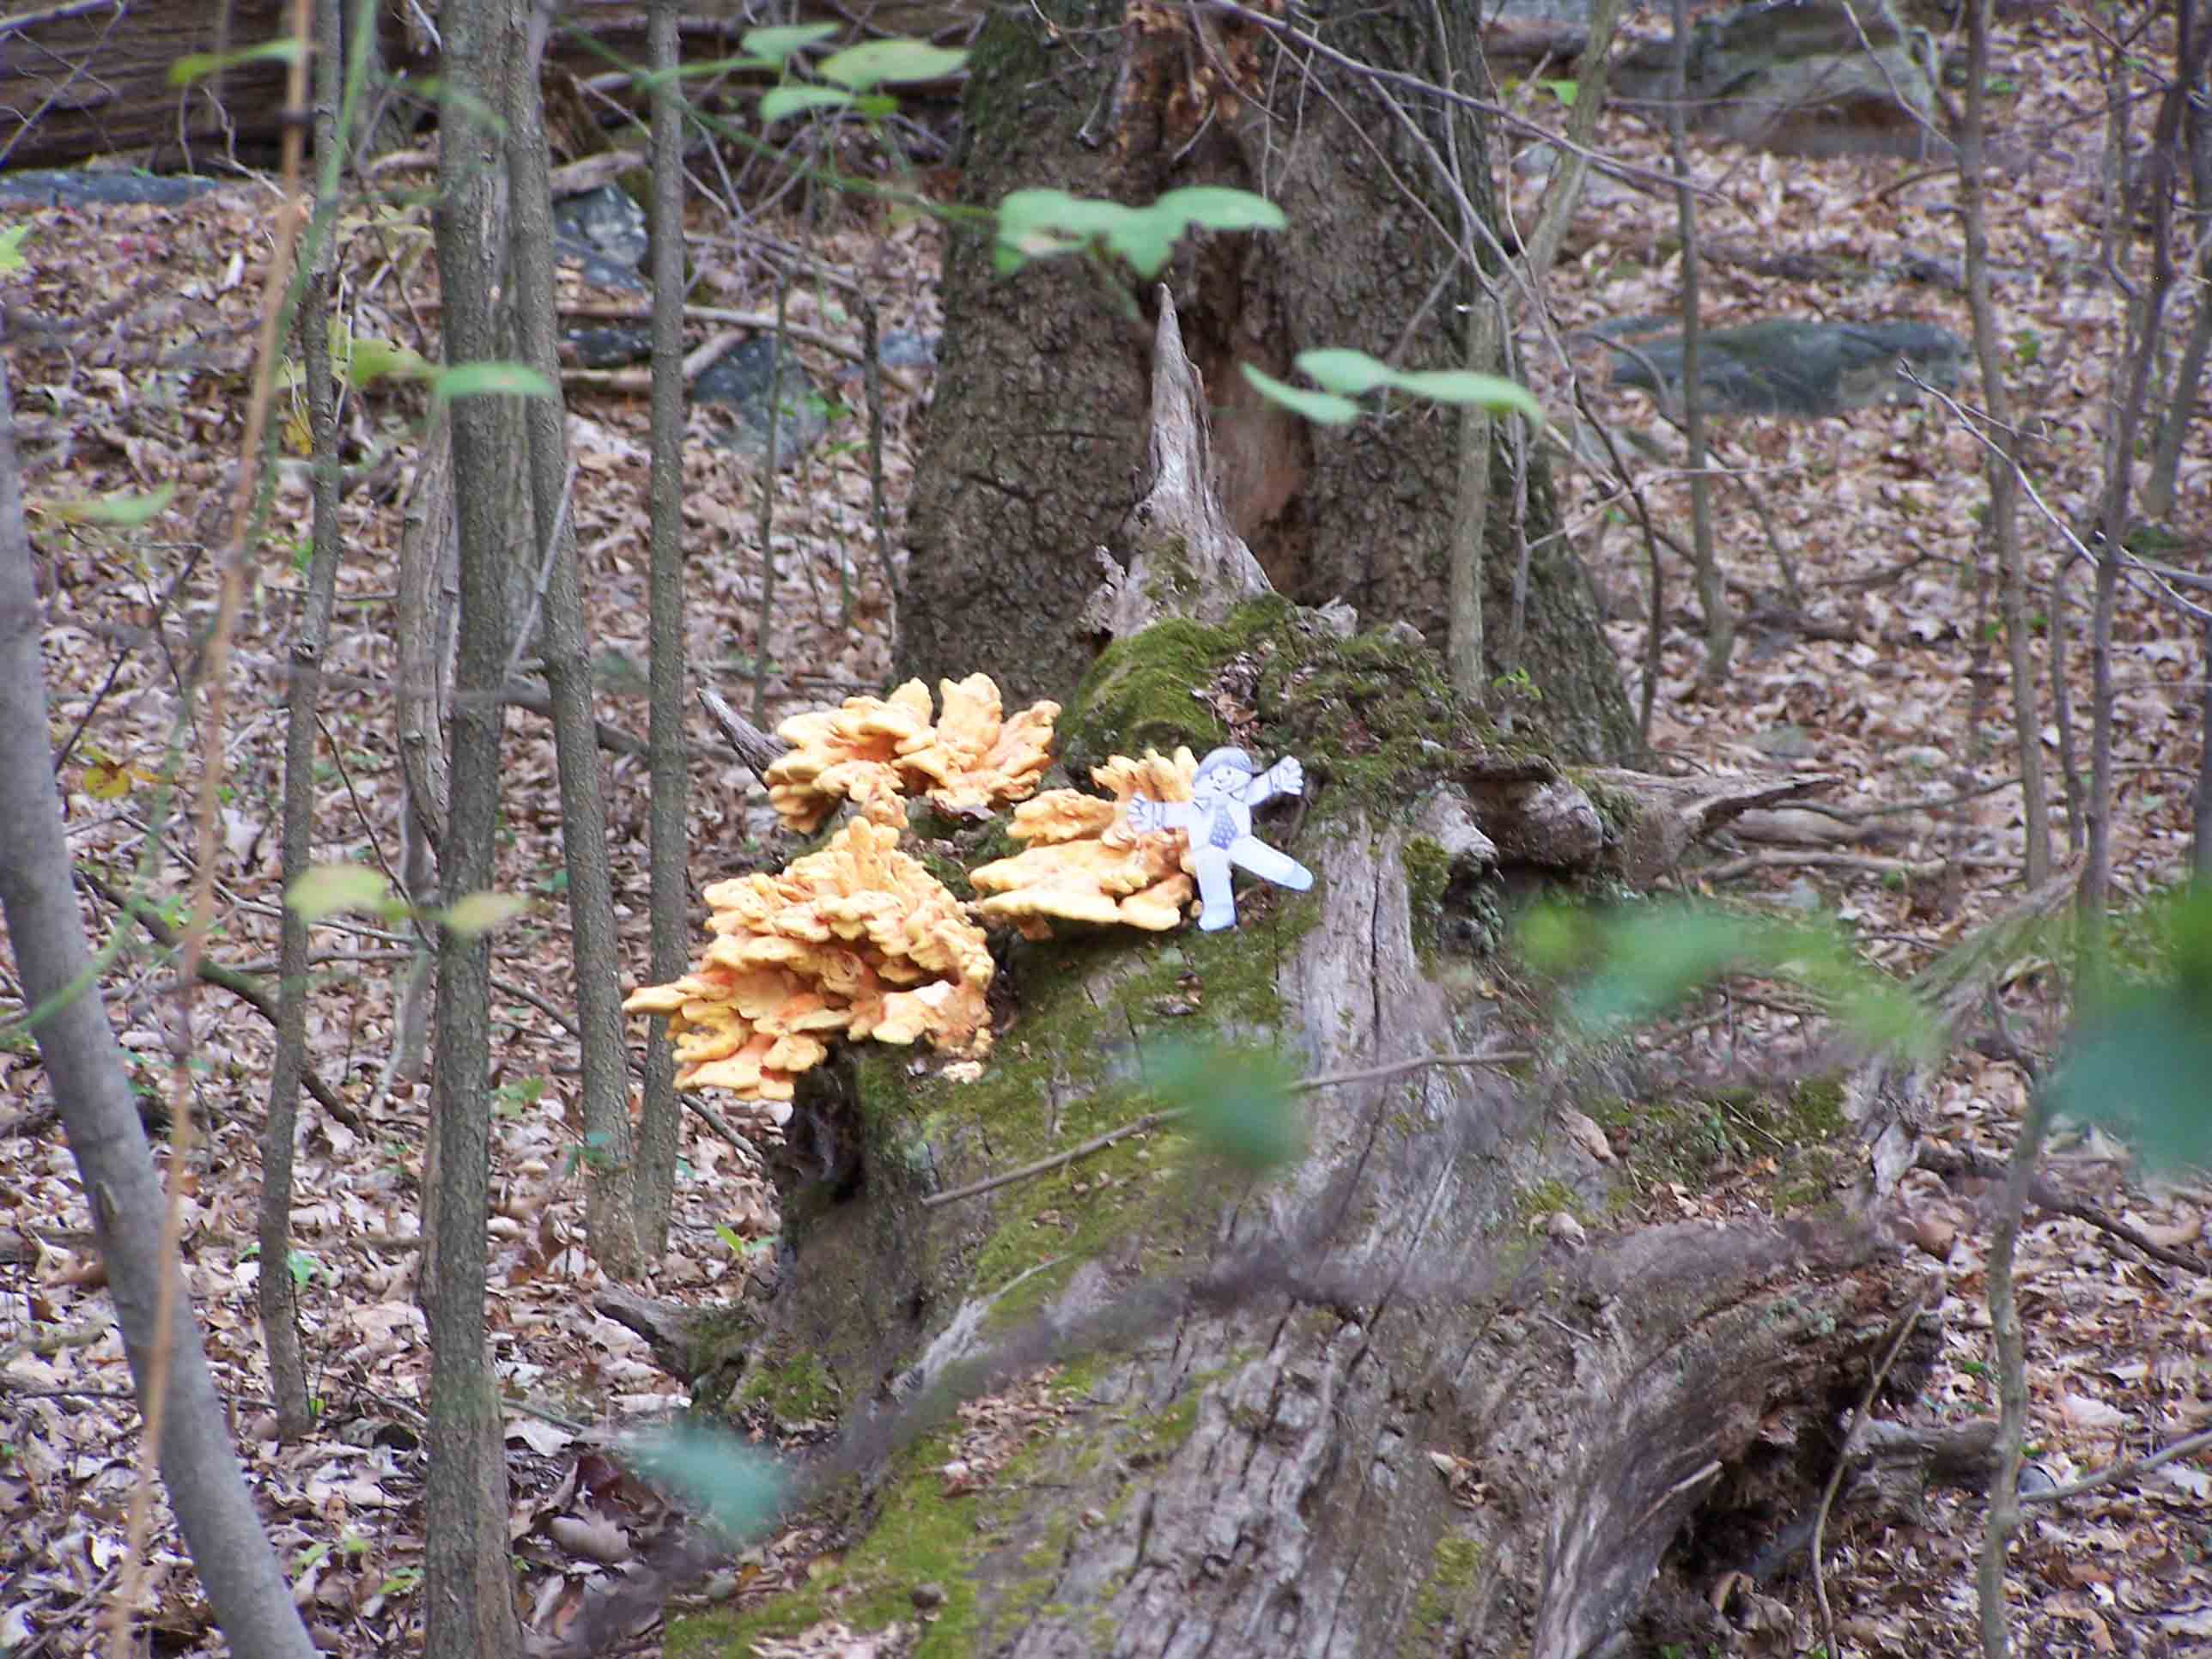 Colorful fungus